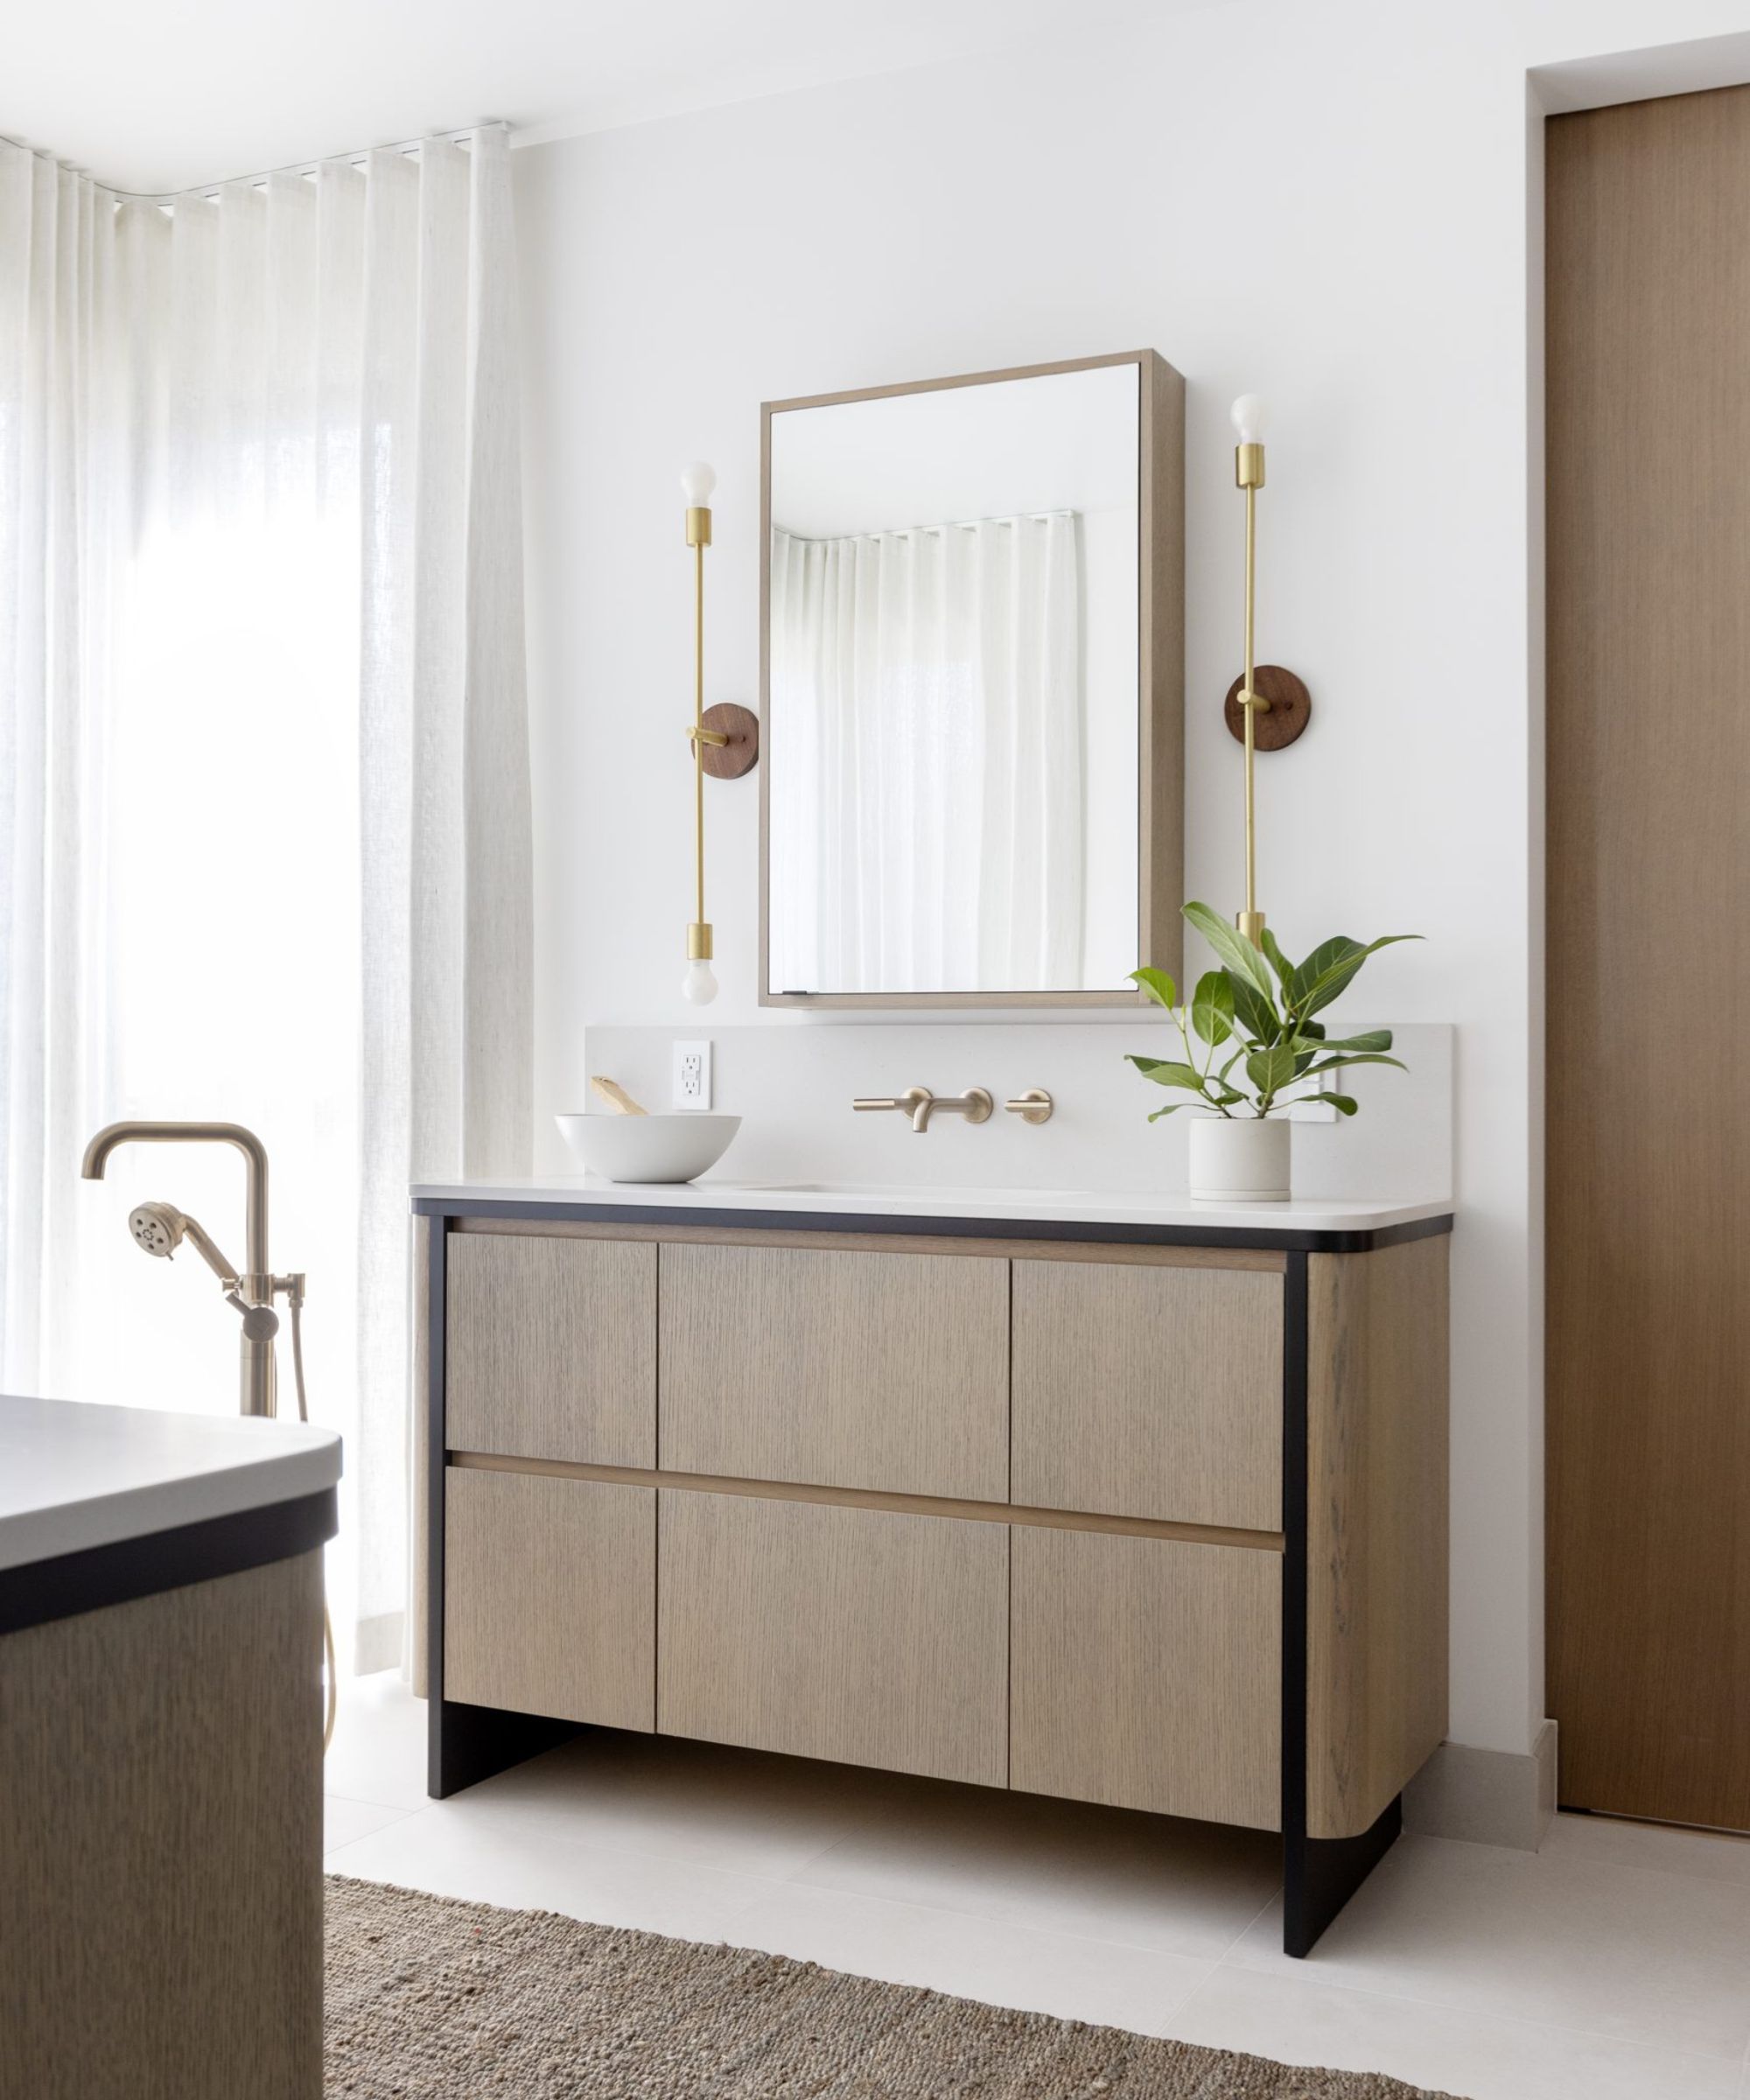 Neutral bathroom with wooden vanity